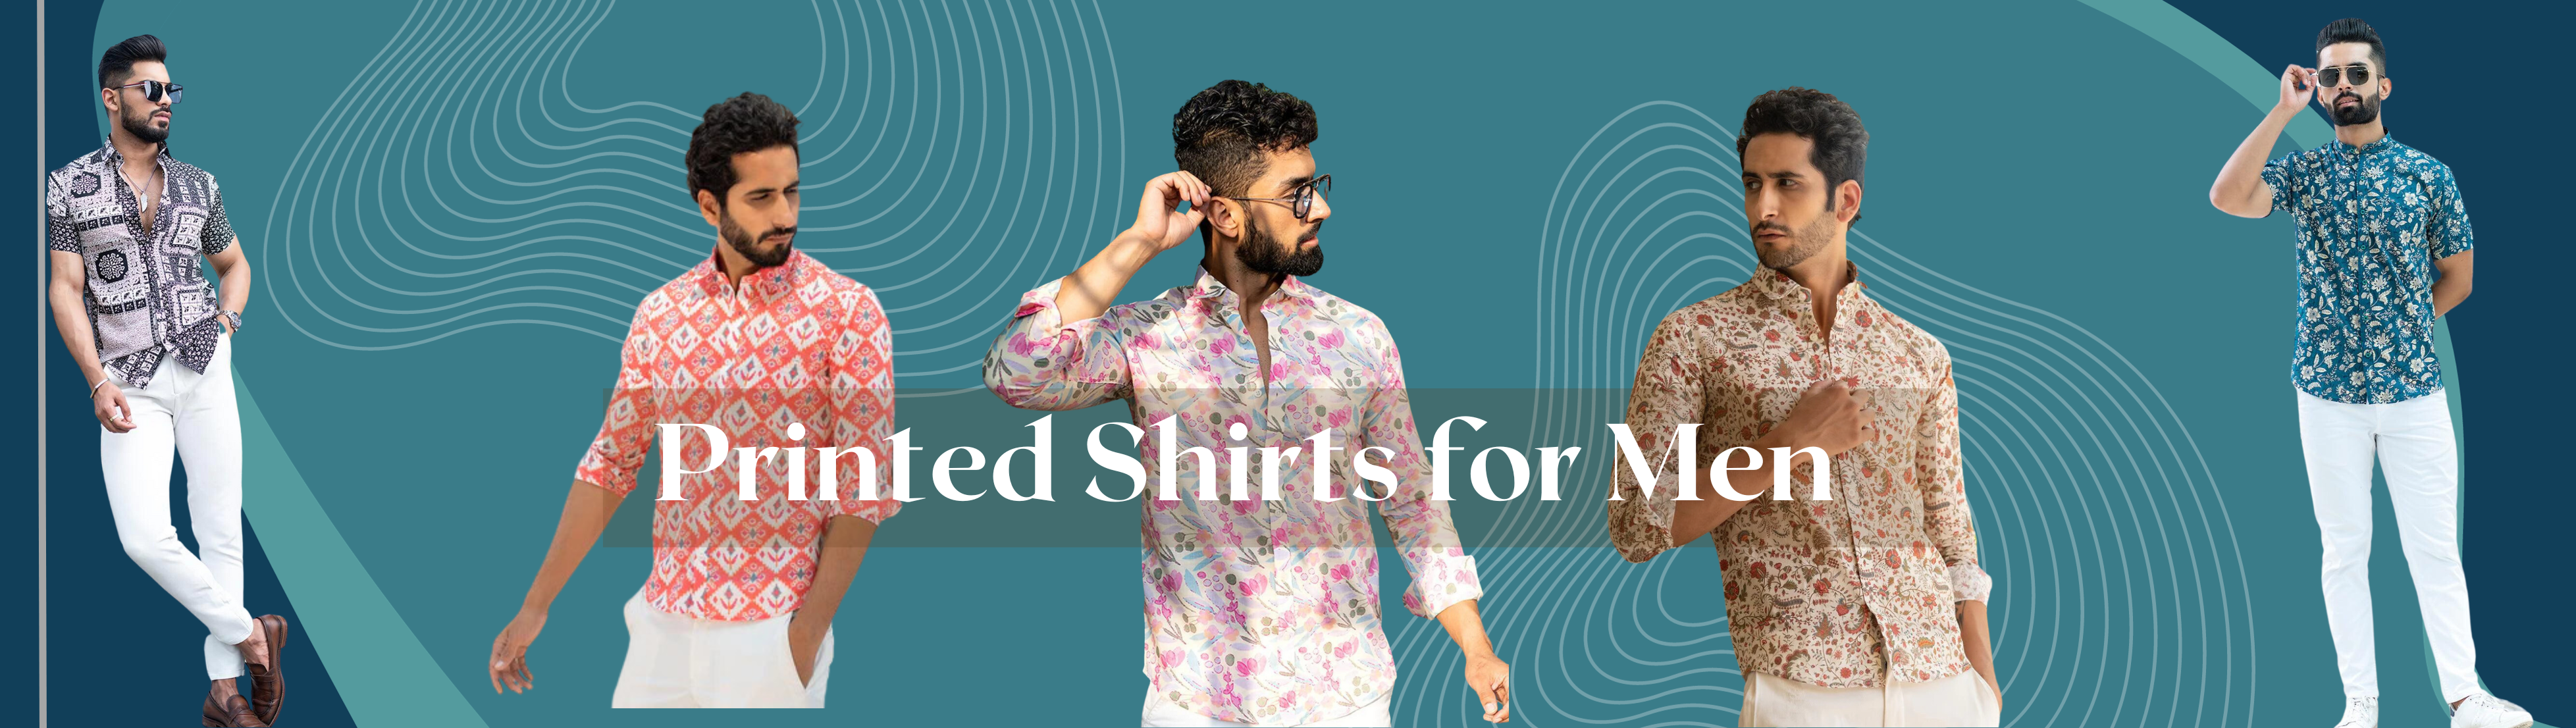 Printed Shirts for Men